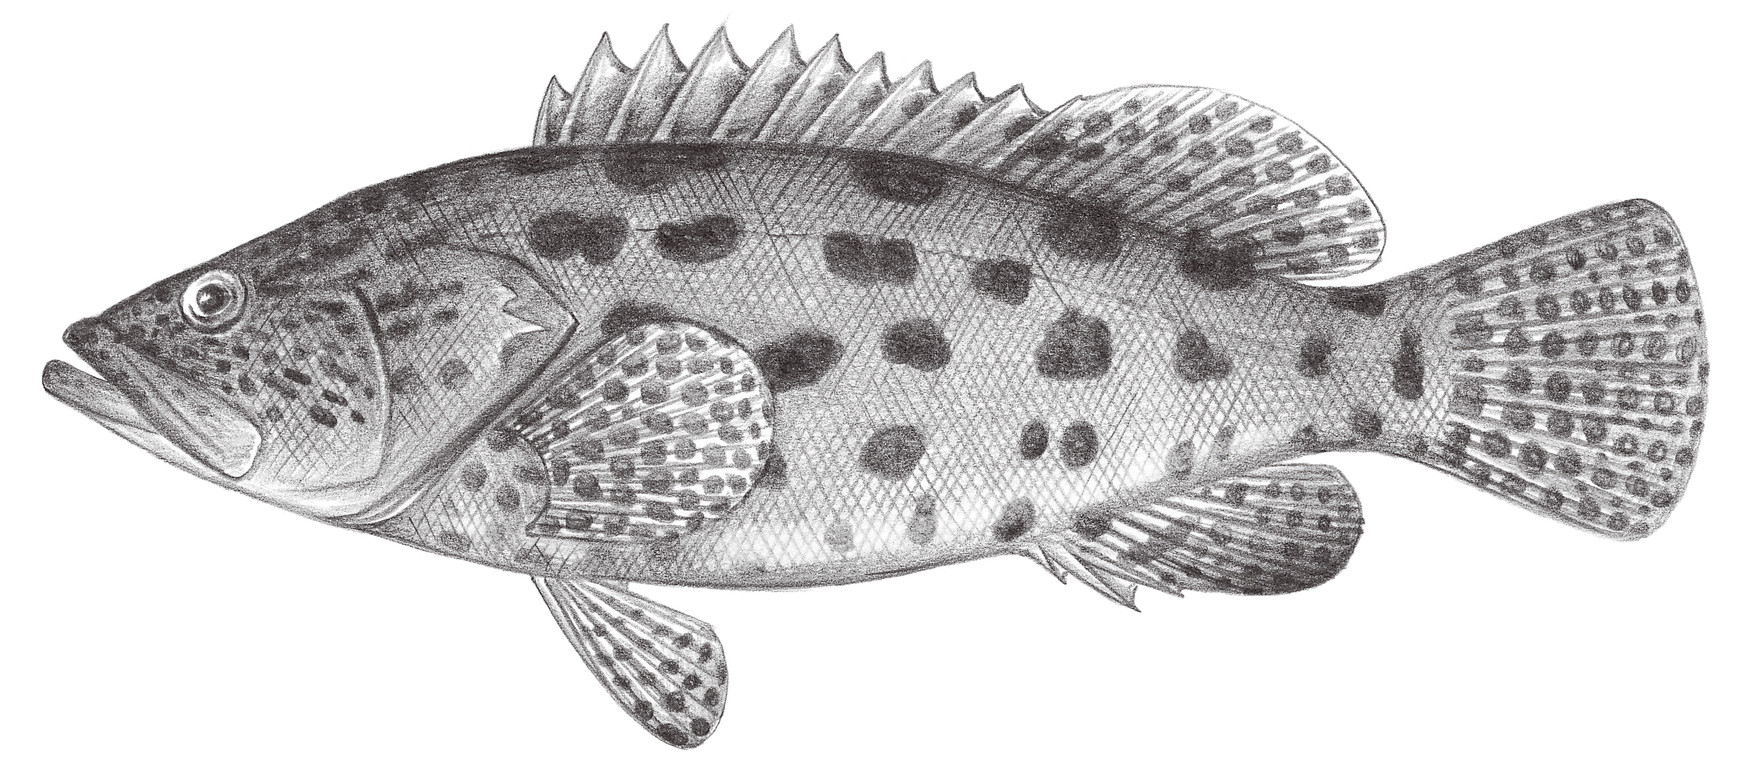 1050.	藍身大斑石斑魚 Epinephelus tukula Morgans, 1959